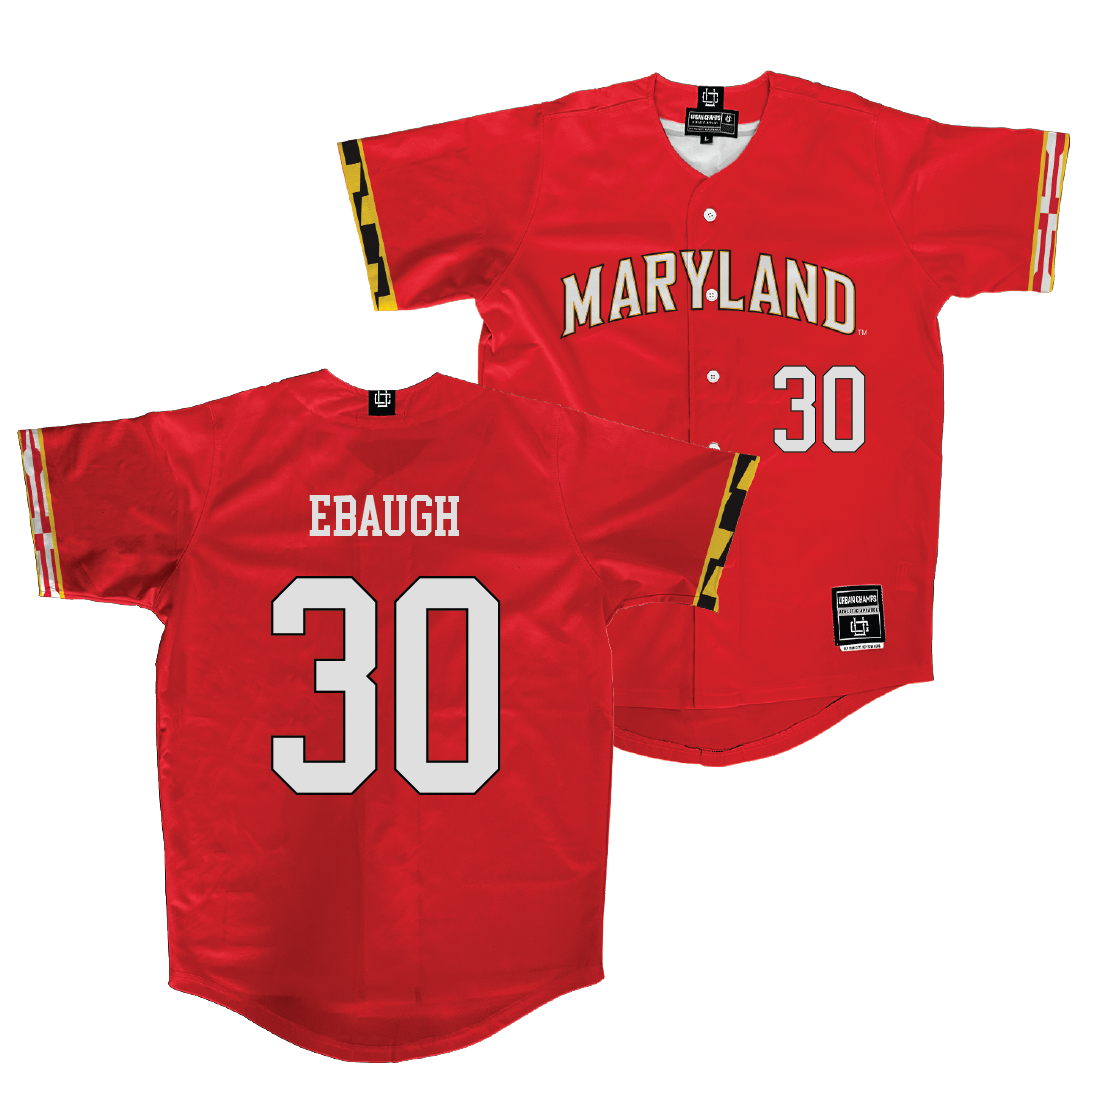 Maryland Softball Red Jersey - Genevieve Ebaugh | #30